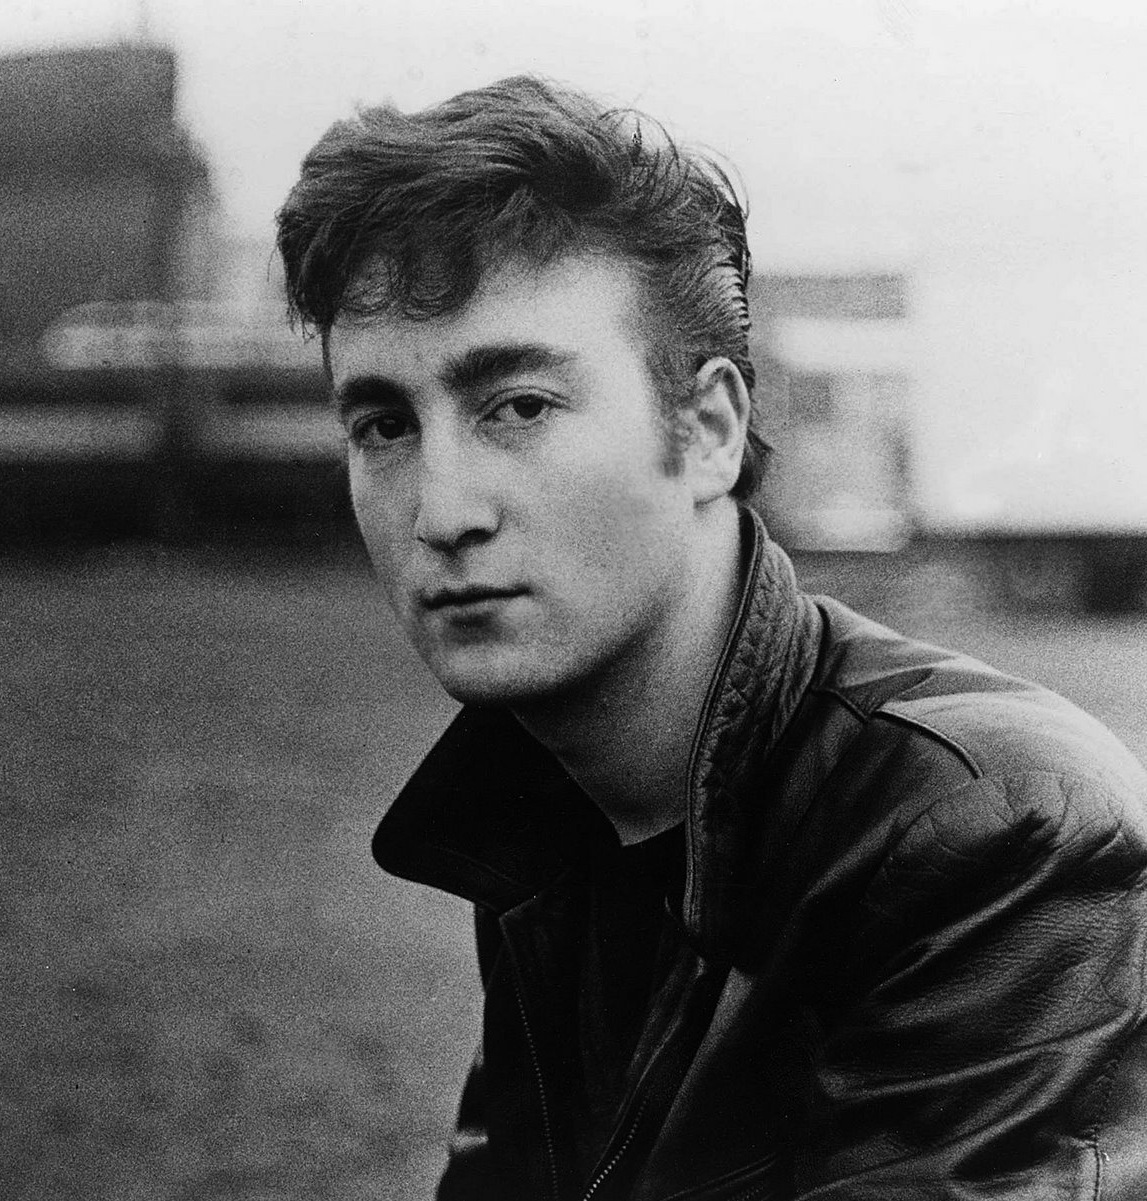 Ryan's Blog: A John Lennon Tribute
